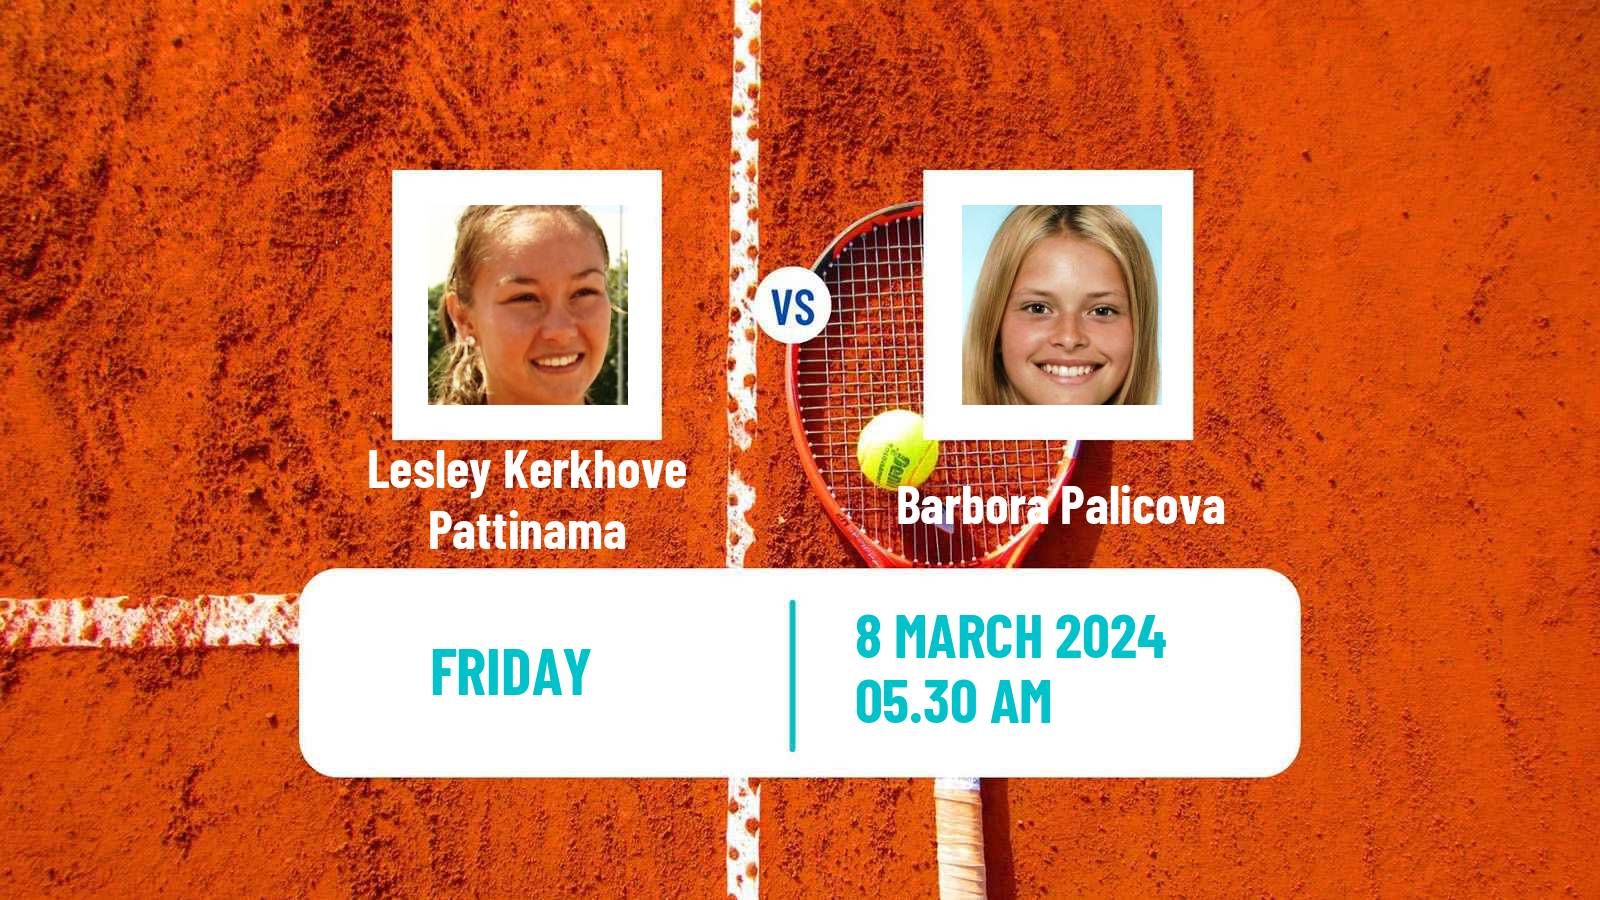 Tennis ITF W35 Solarino Women Lesley Kerkhove Pattinama - Barbora Palicova